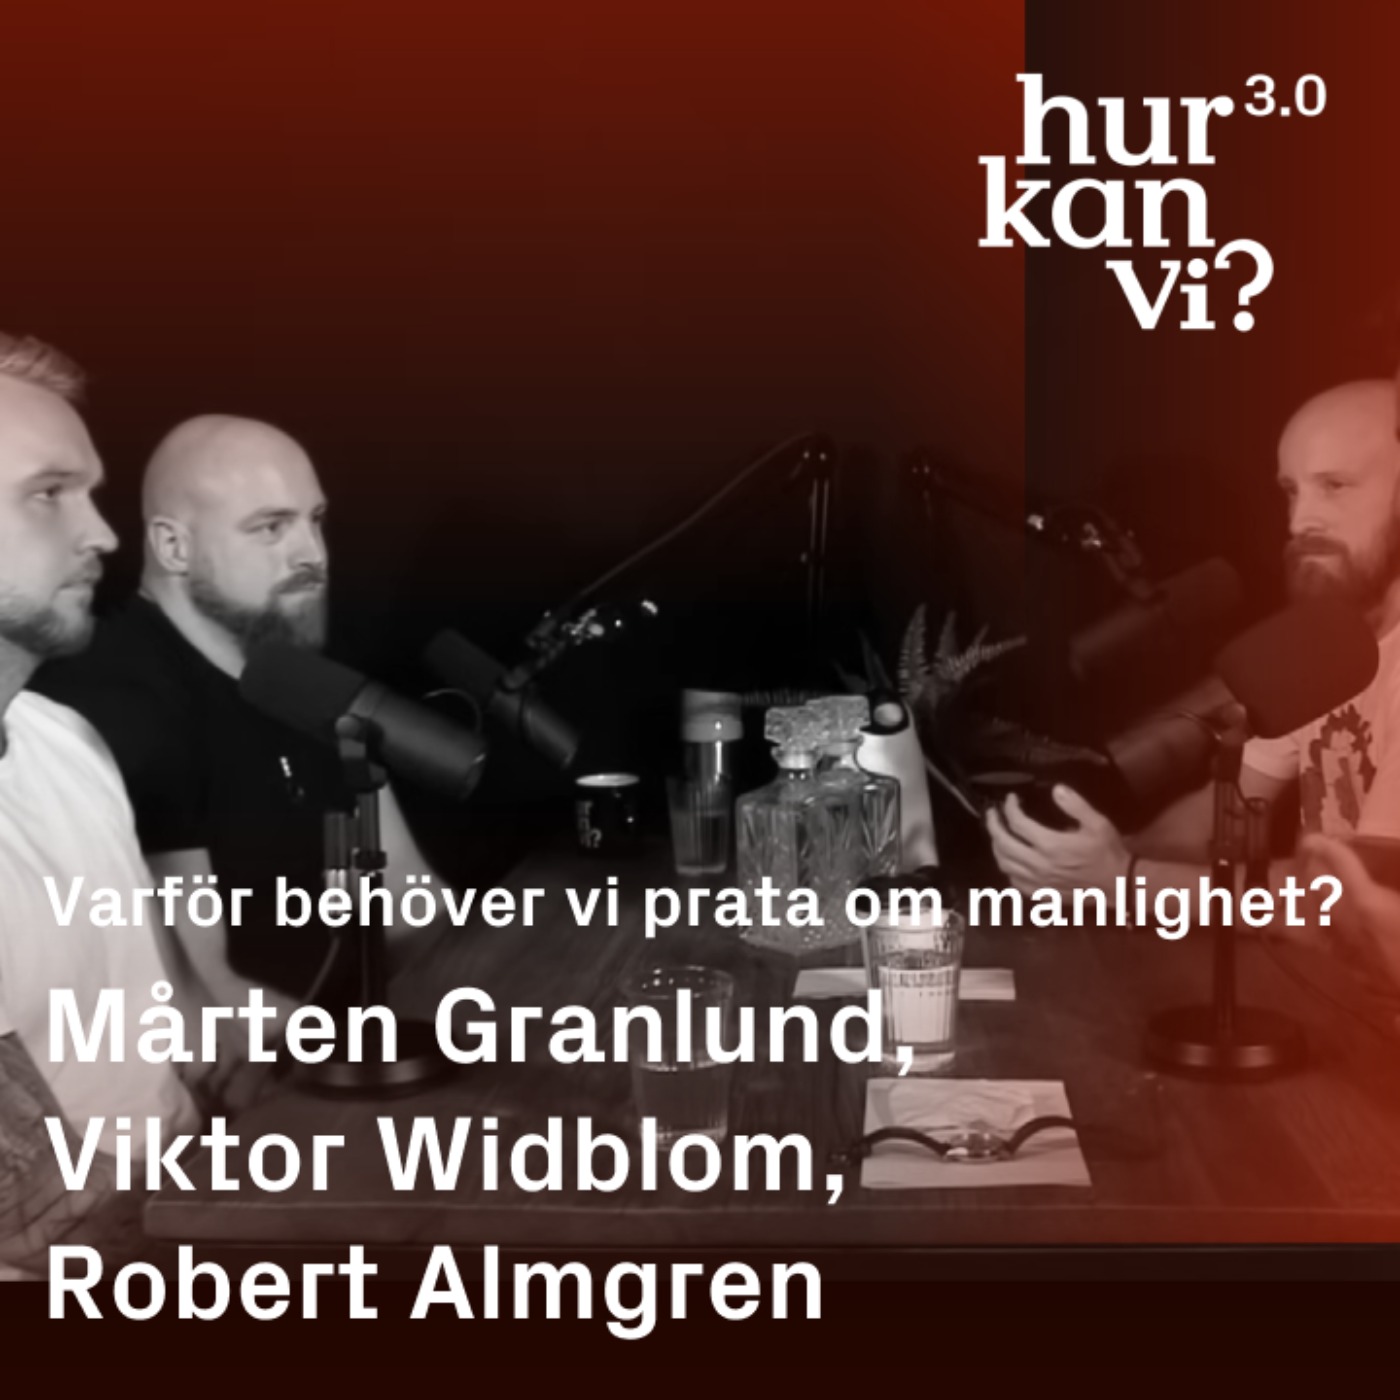 Mårten Granlund, Viktor Widblom, Robert Almgren - Q&A